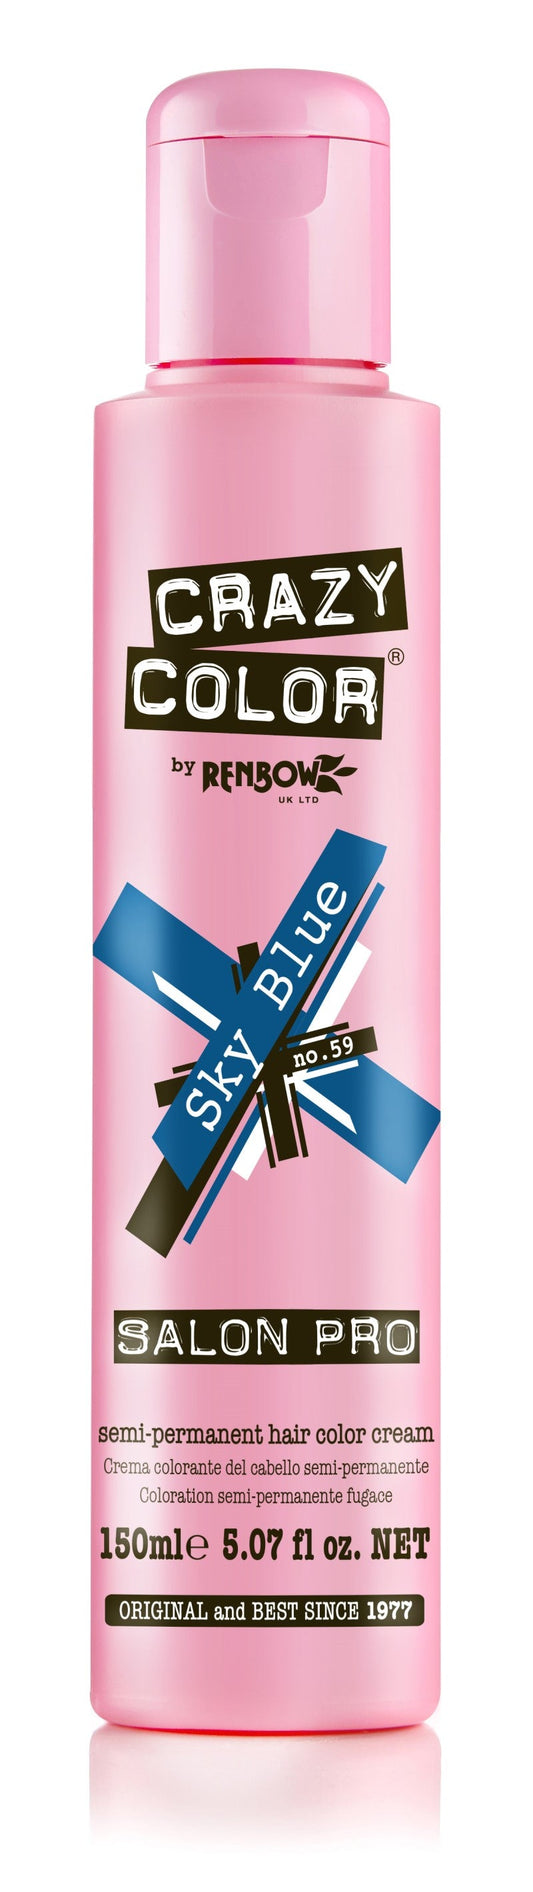 Crazy Color Semi-Permanent Hair Color Cream - Sky Blue No. 59 (150ml)